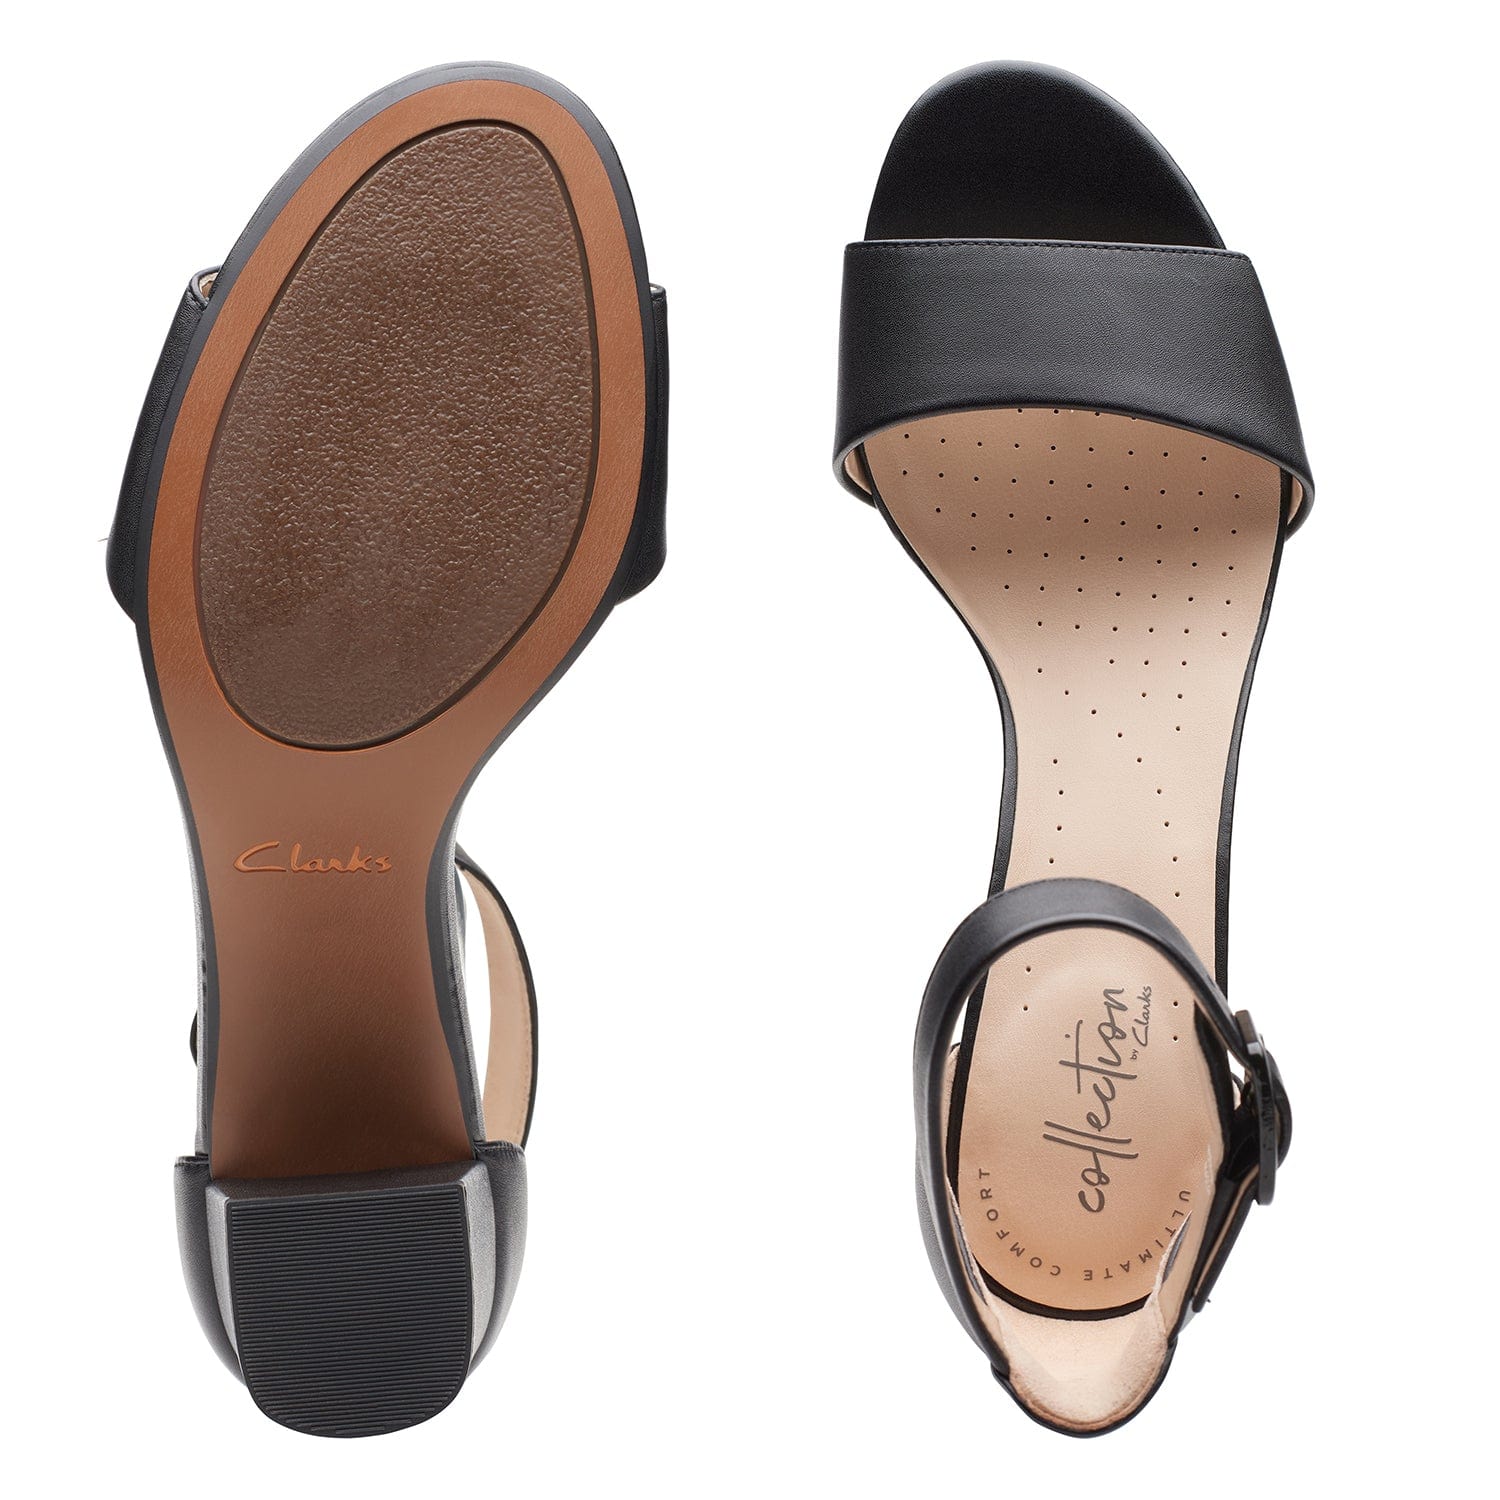 Clarks Deva Mae - Sandals - Black Leather - 261400075 - E Width (Wide Fit)